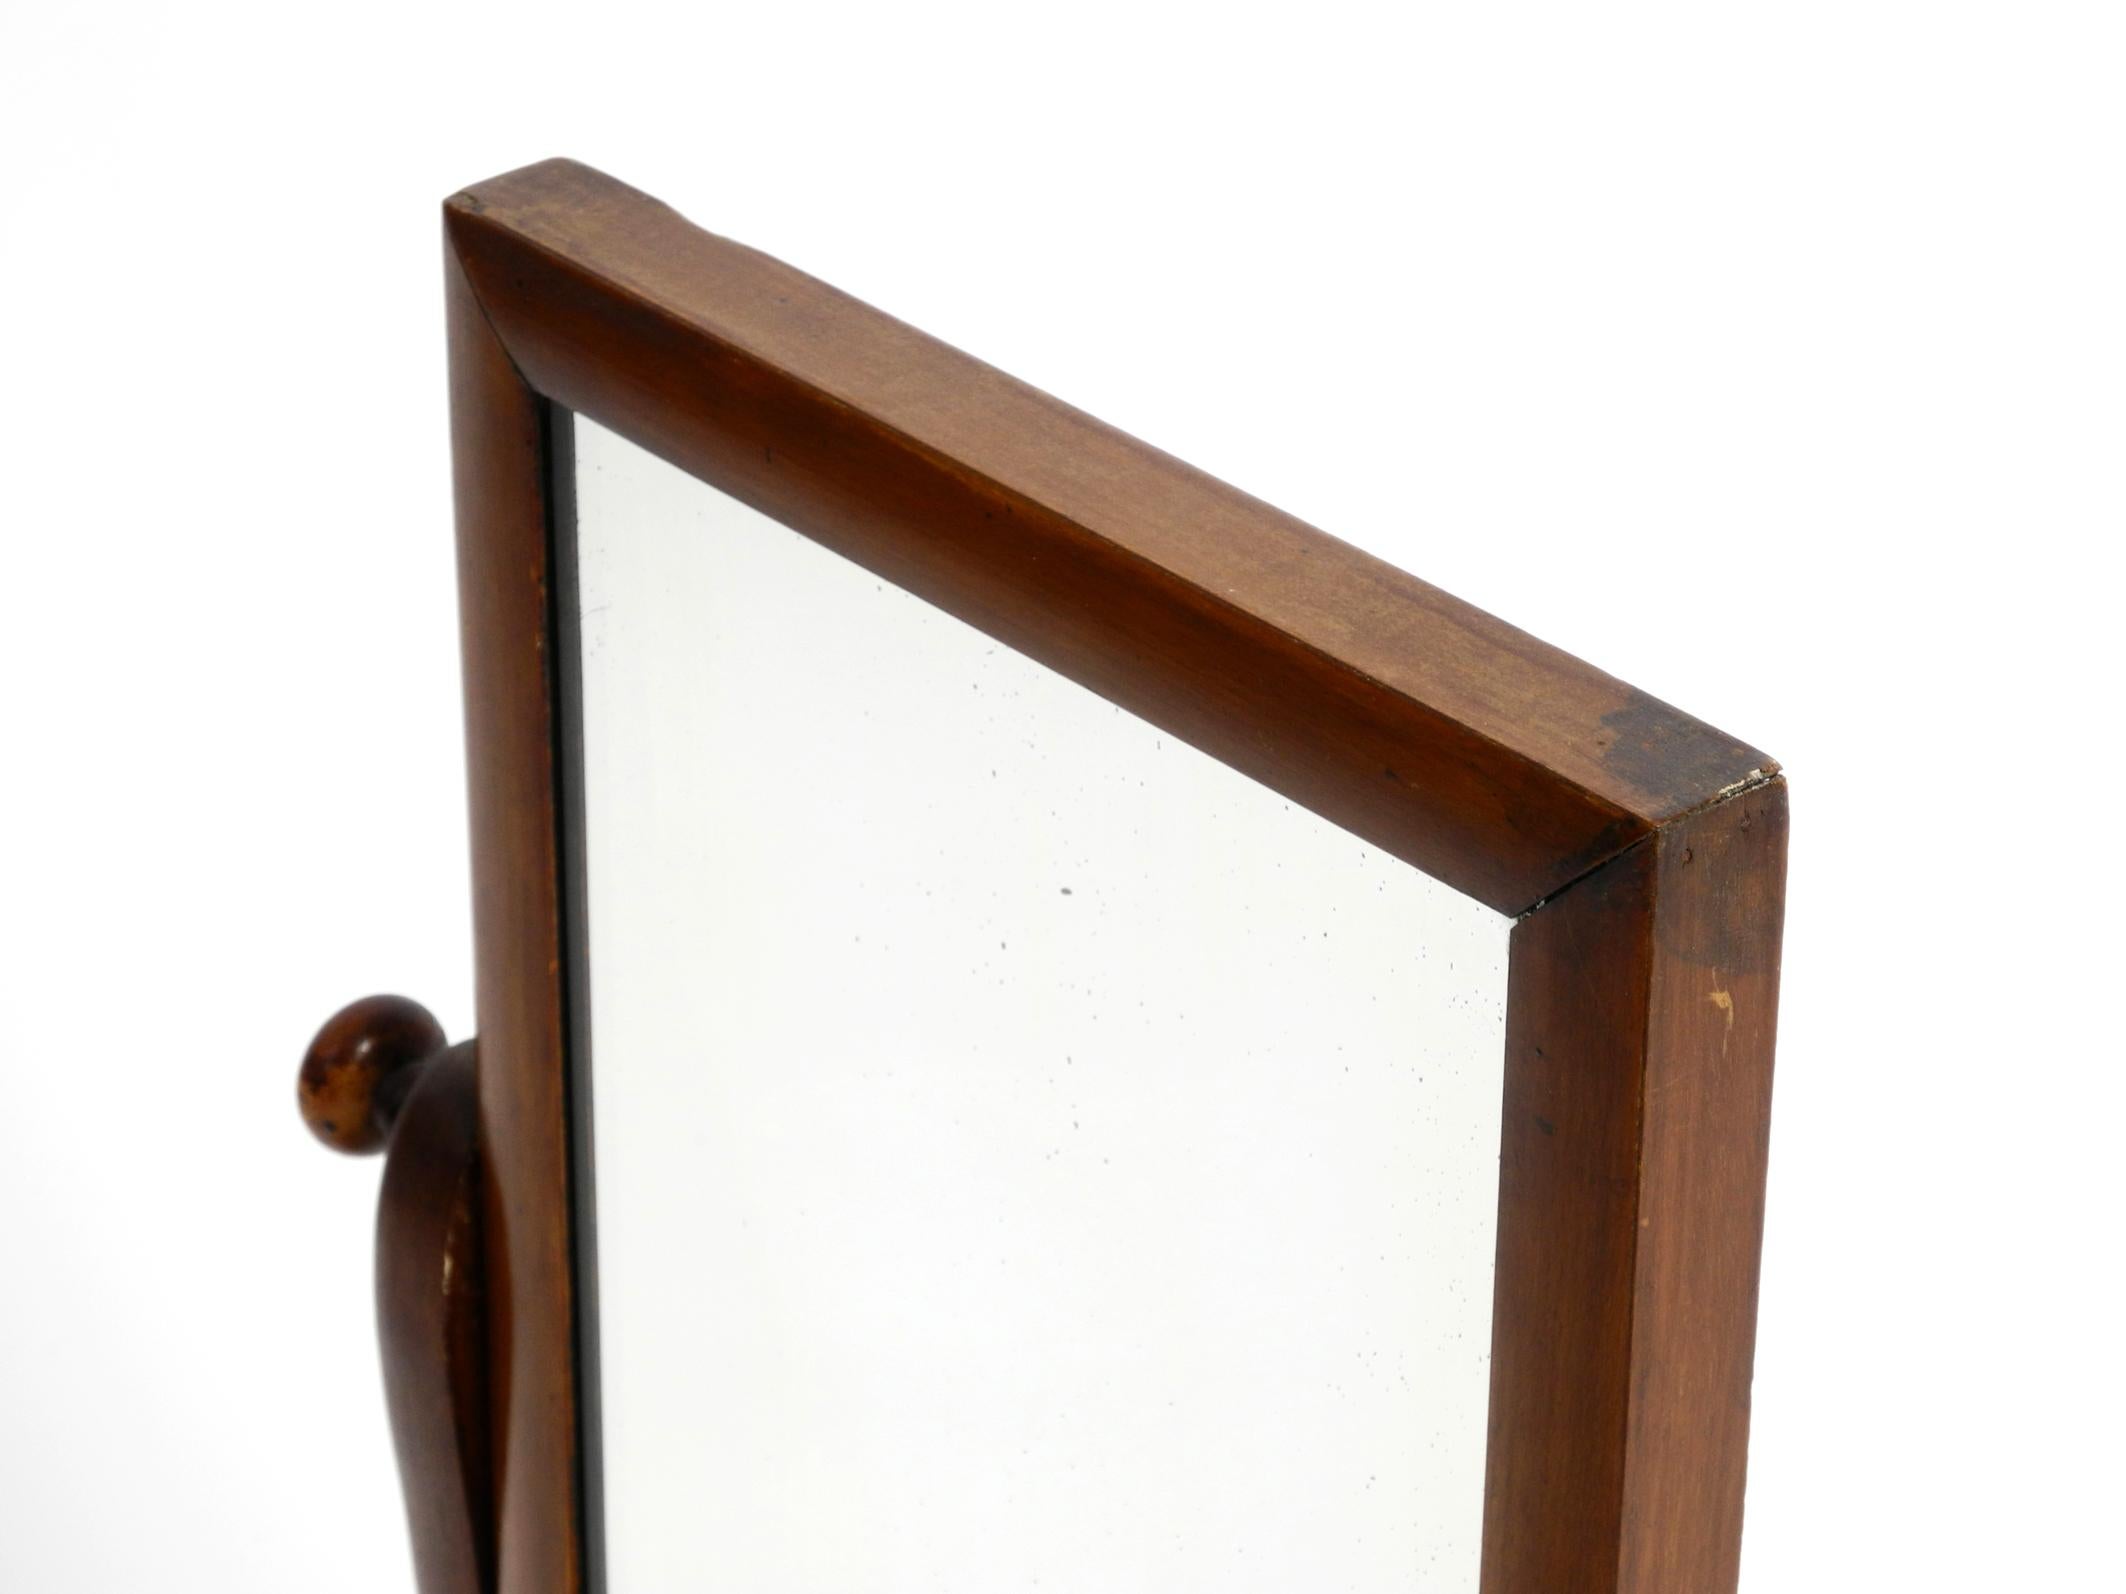 Wonderful Rare Original 1930s Large Swiveling Dresser Mirror Made of Walnut Wood 2